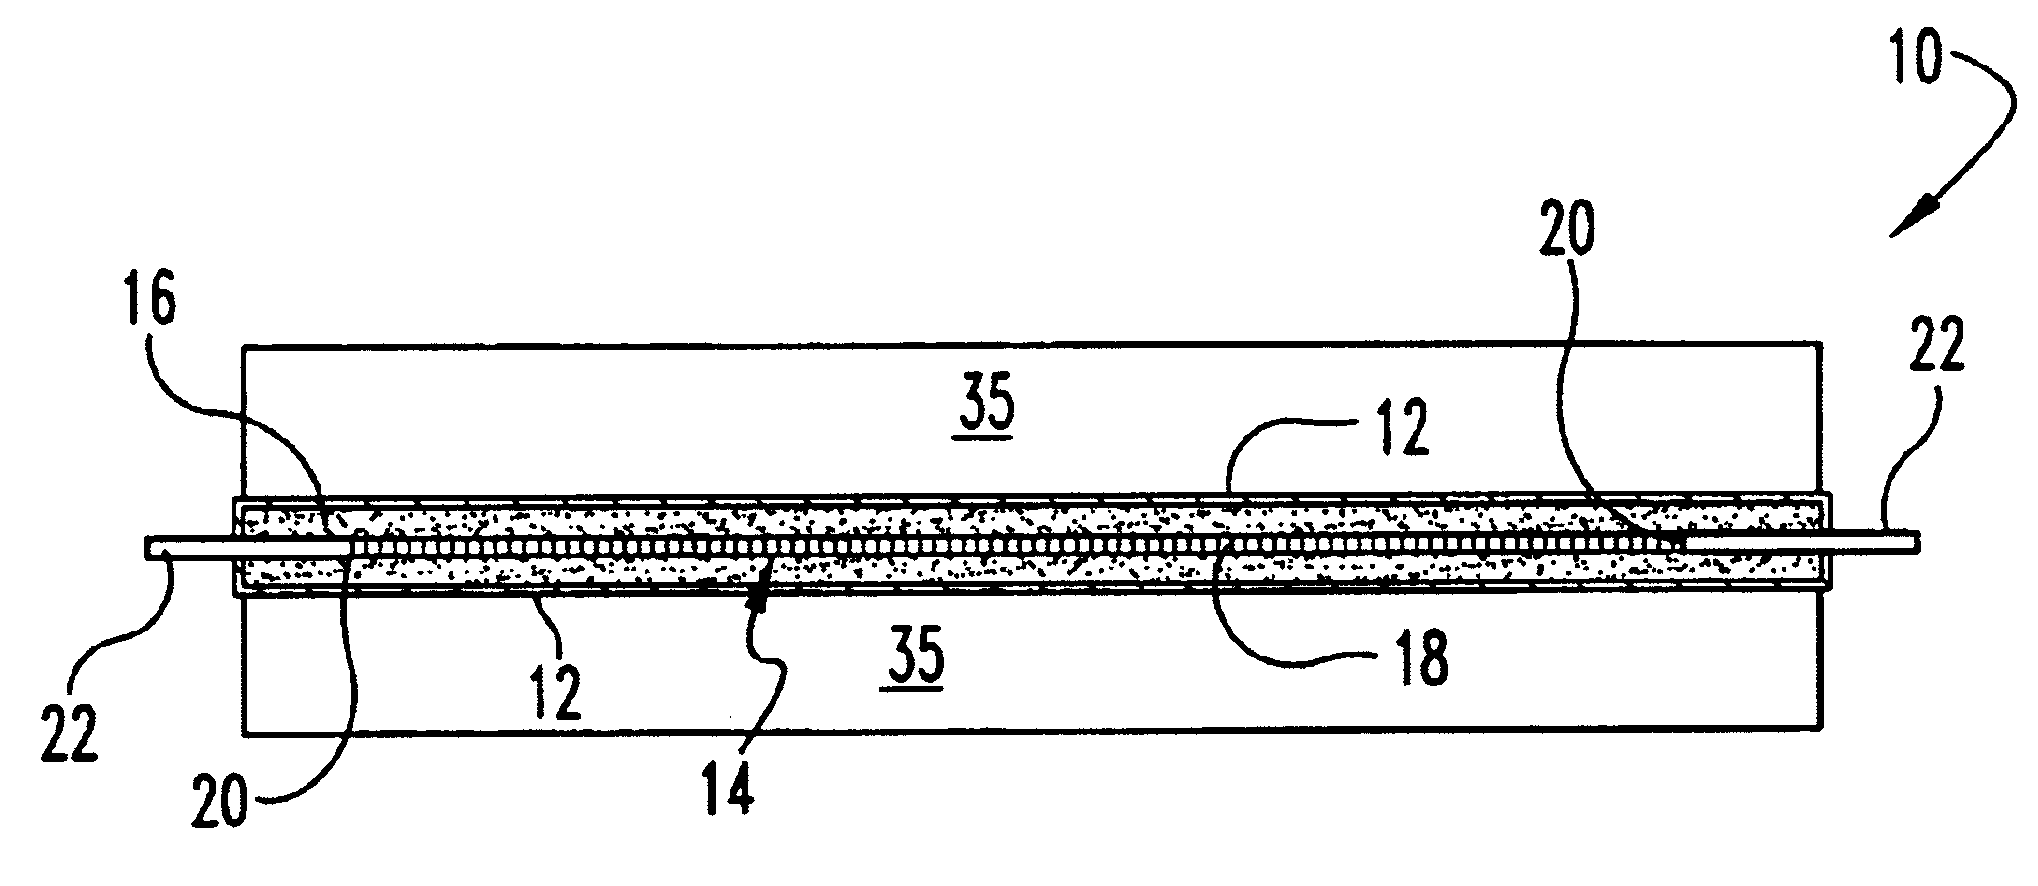 Corrugated metal ribbon heating element